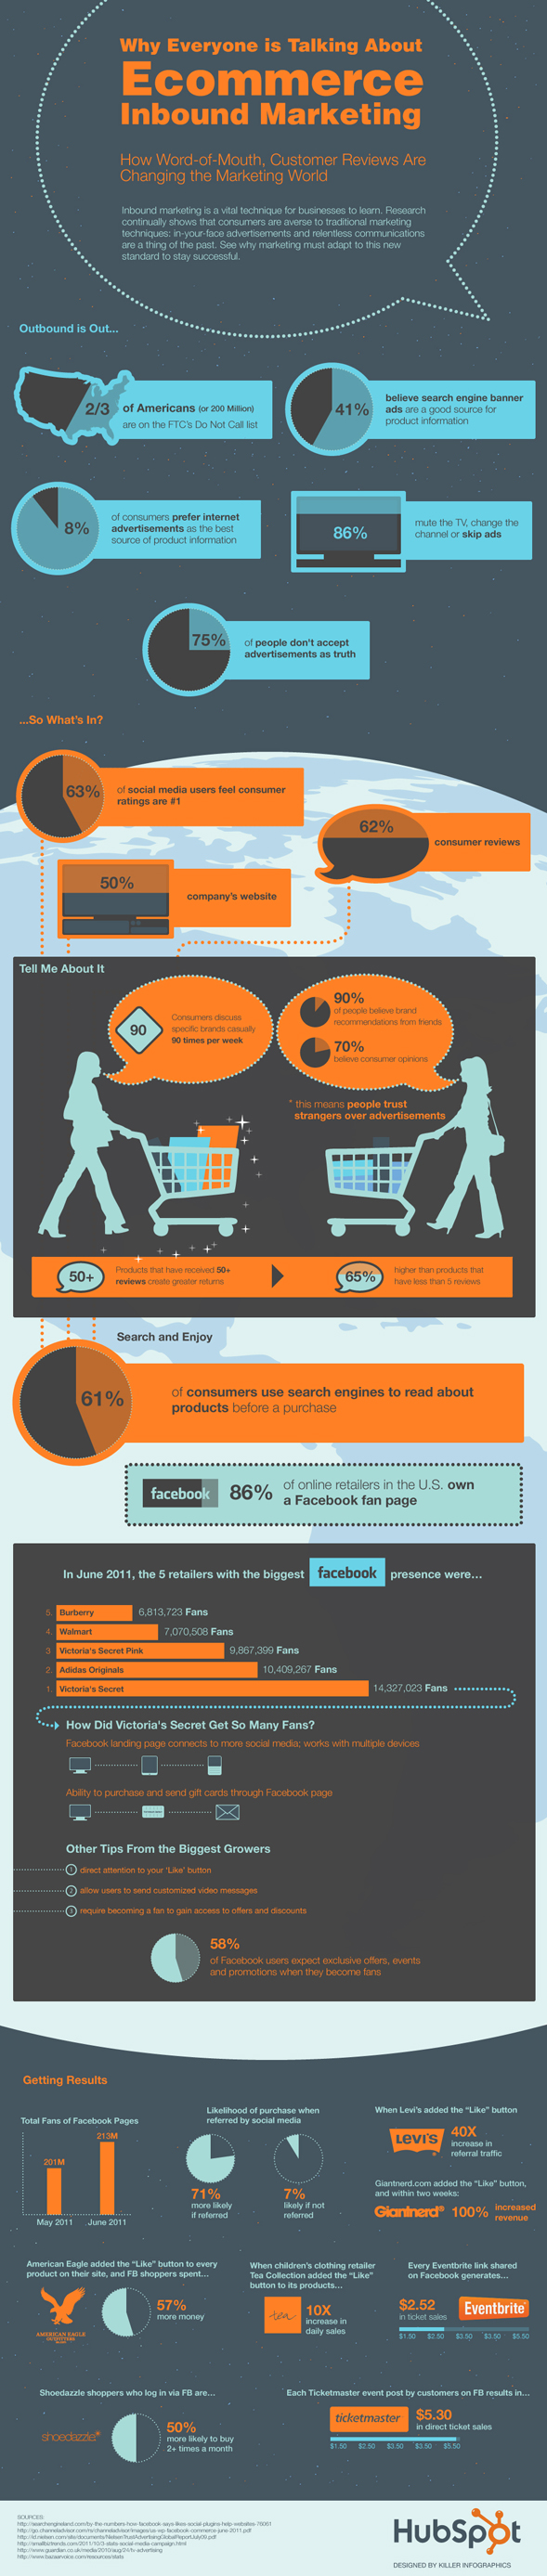 Infográfico sobre a importância da mídia social para consumidores